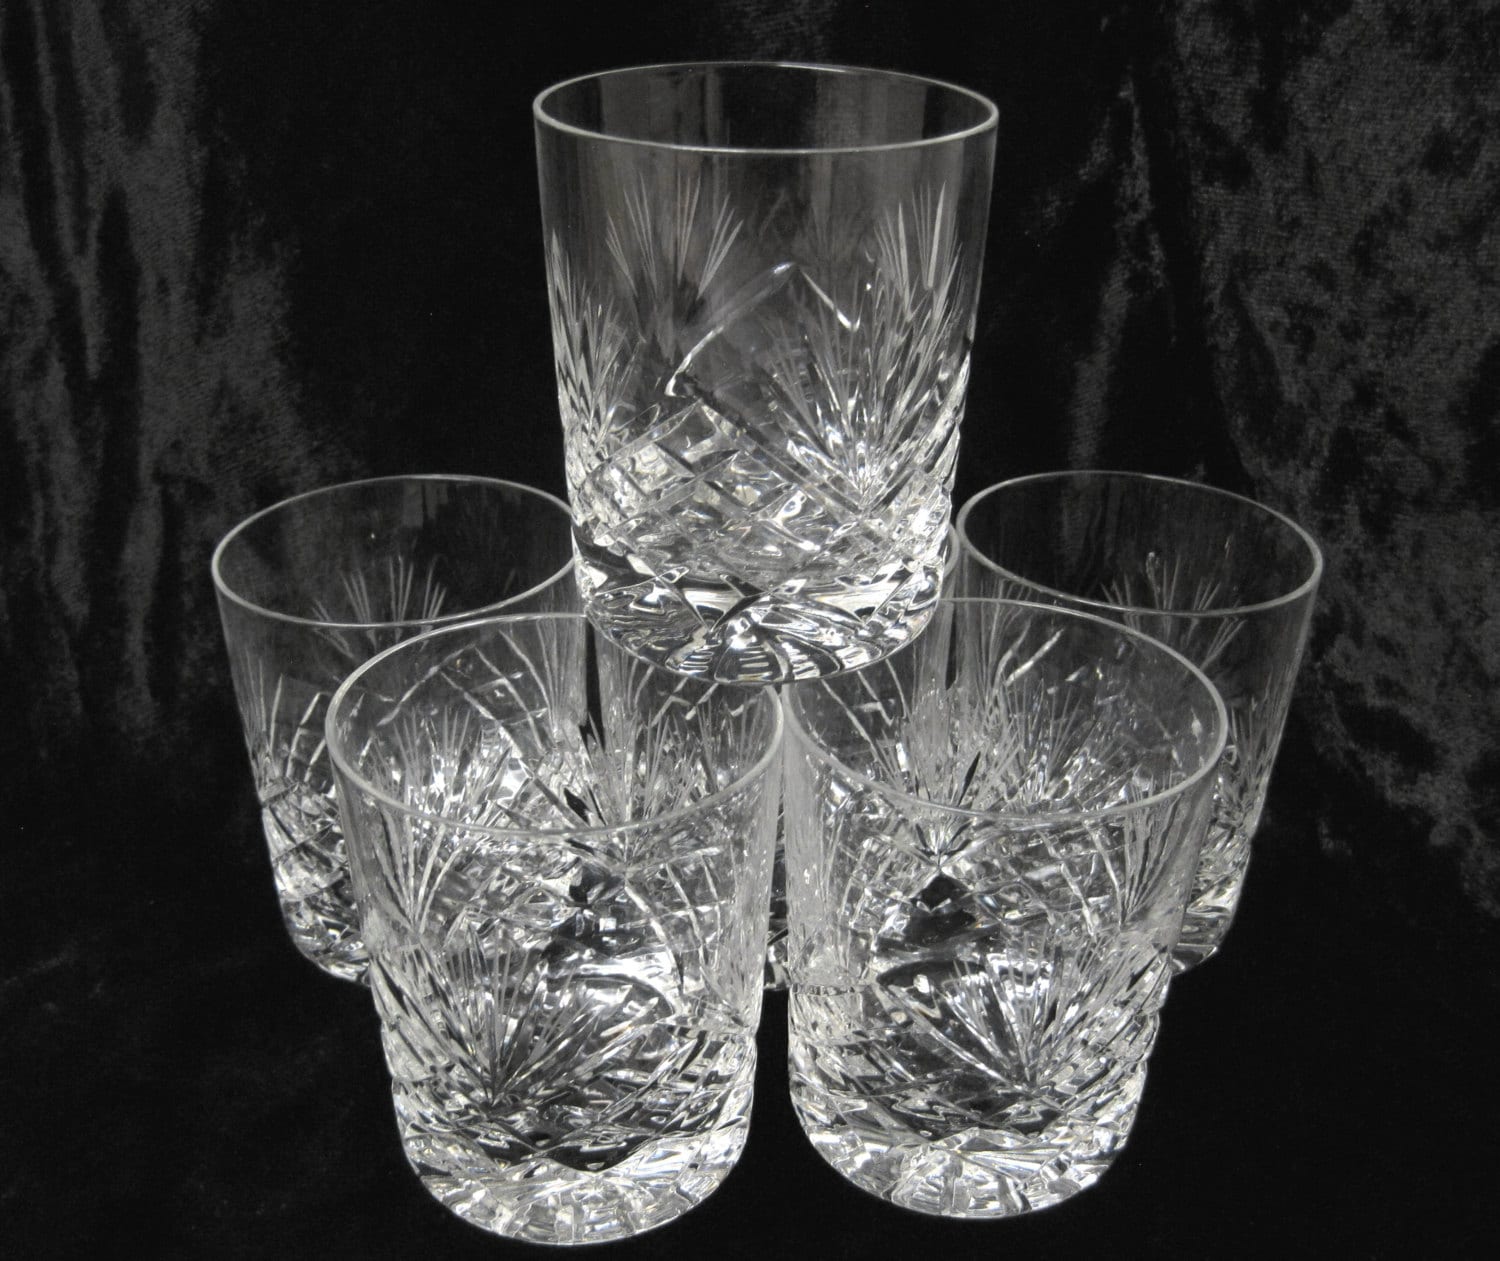 6 Vintage Cut Lead Crystal 6oz Whisky Glasses Scotch Glasses